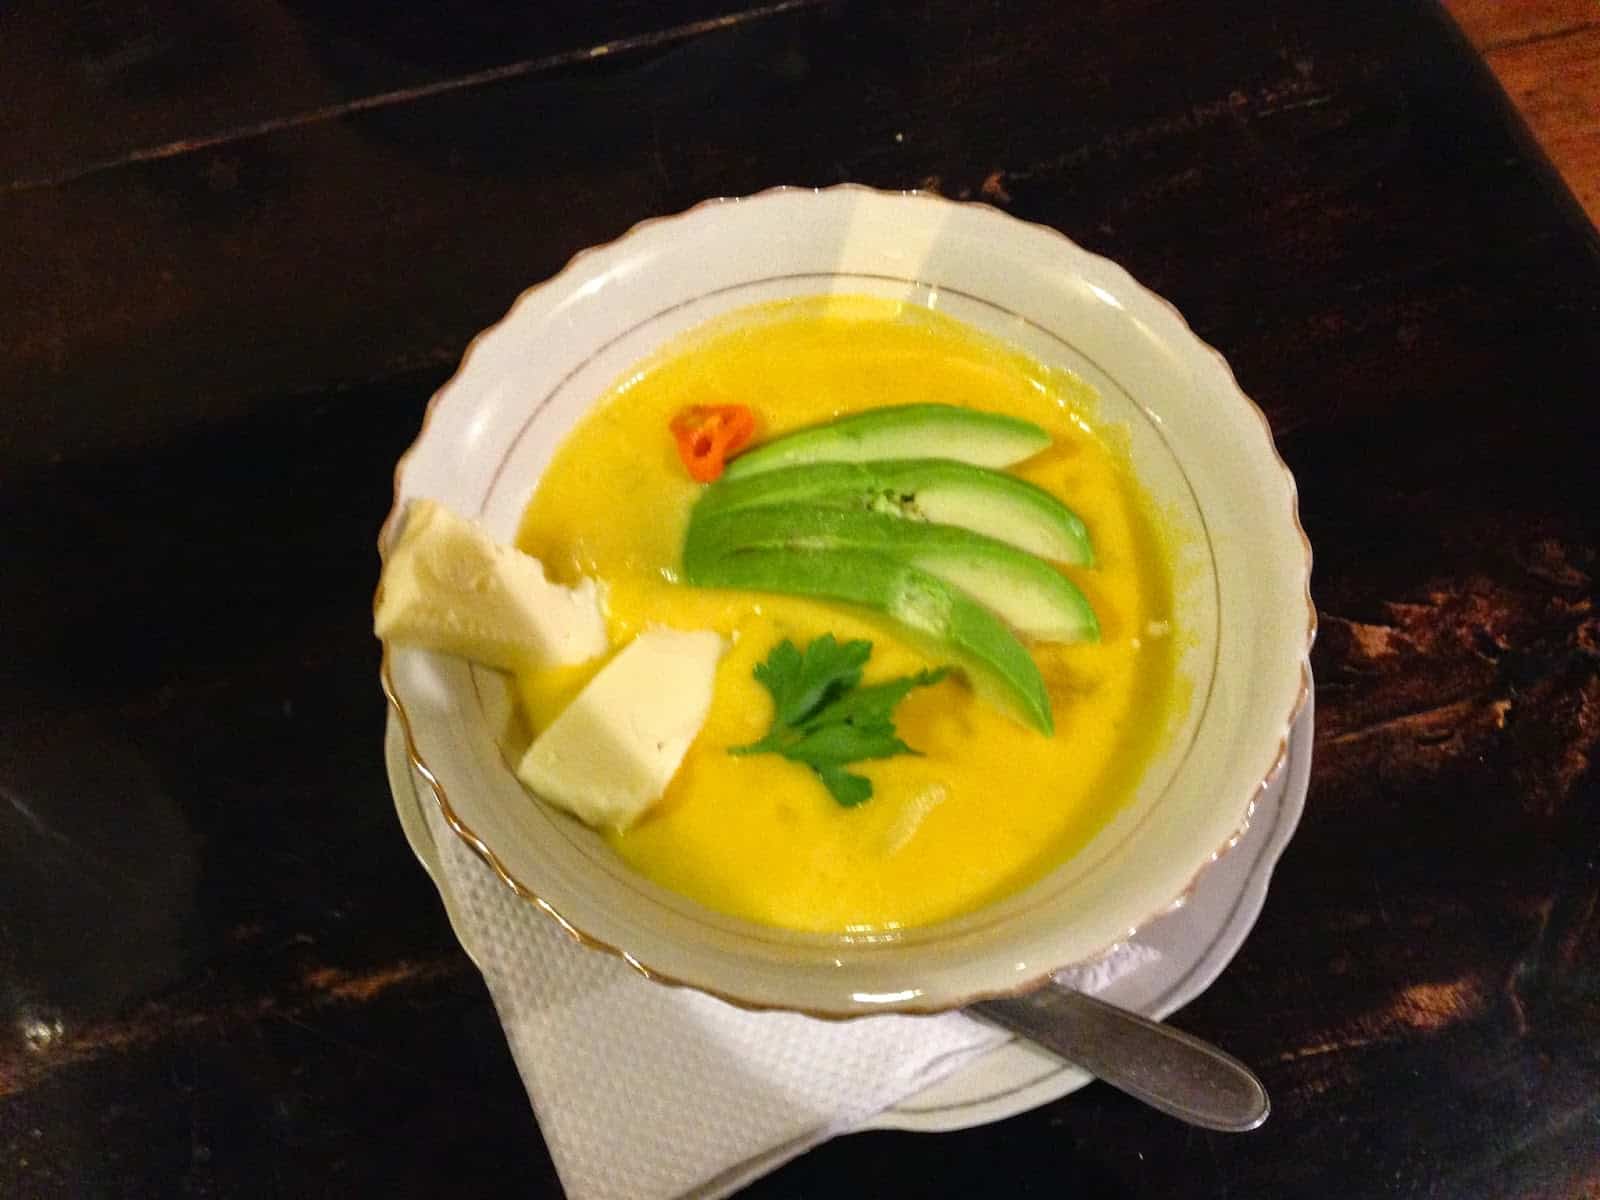 Cheese and avocado soup at La Negra Mala in Quito, Ecuador